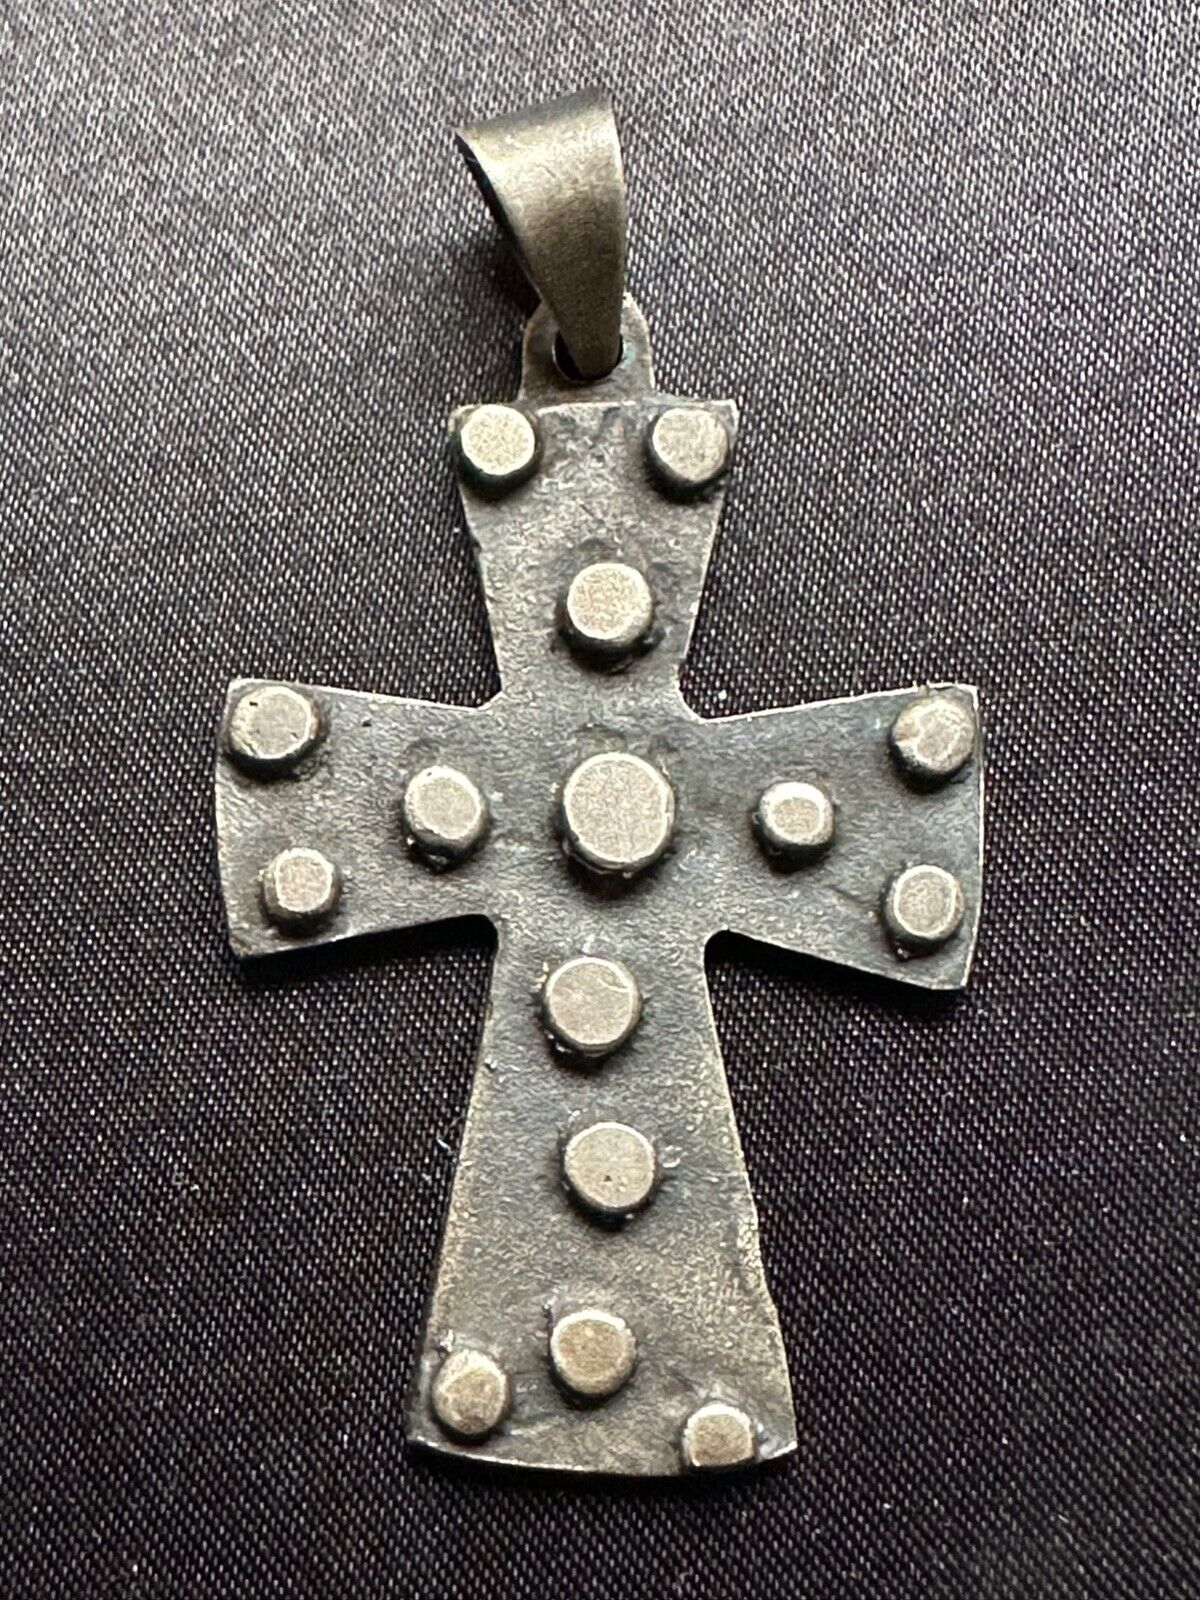 Interesting Vintage Modernist Religious Cross Pendant -  Silver tone metal